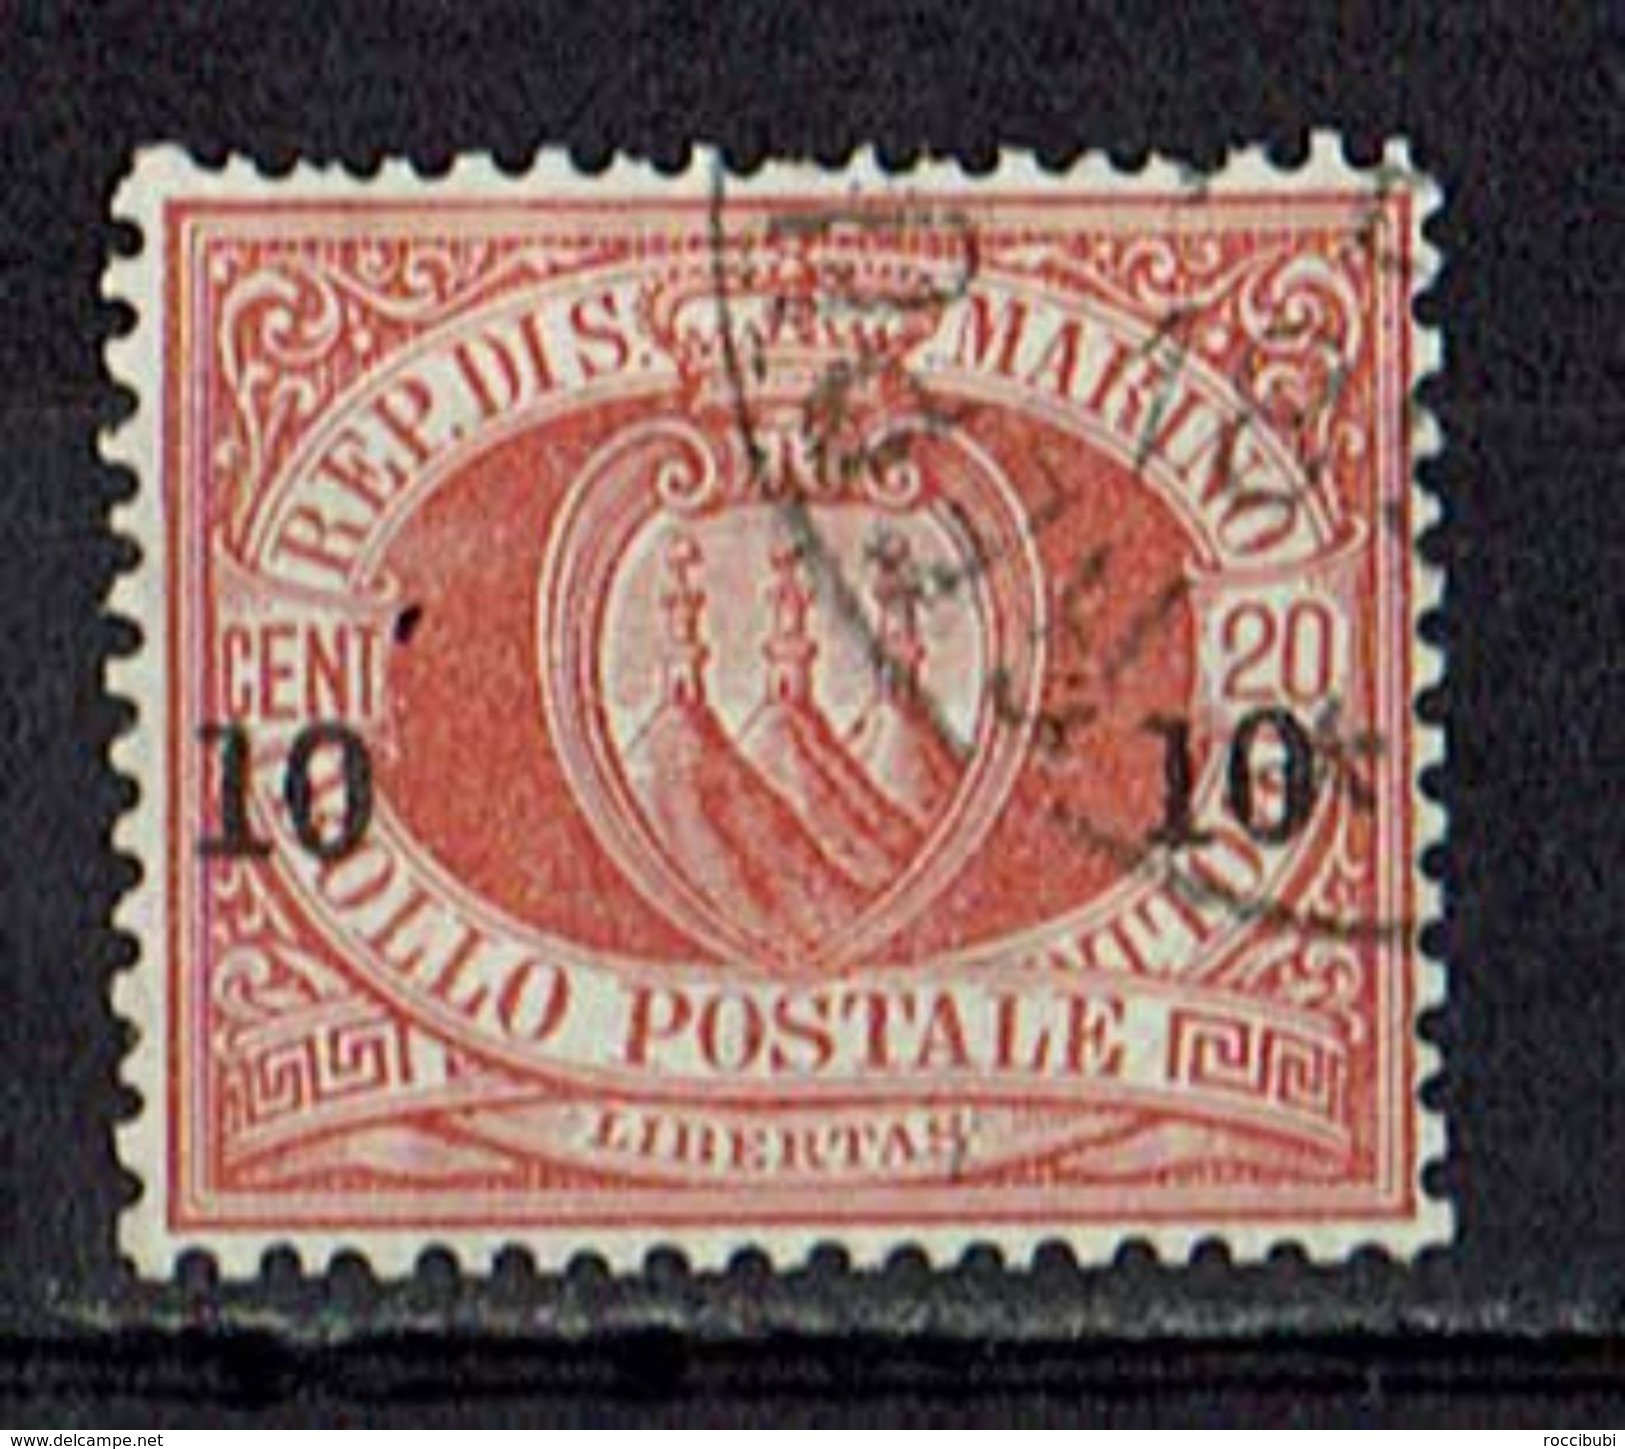 San Marino 1892 // Michel 11 O (9968) - Used Stamps